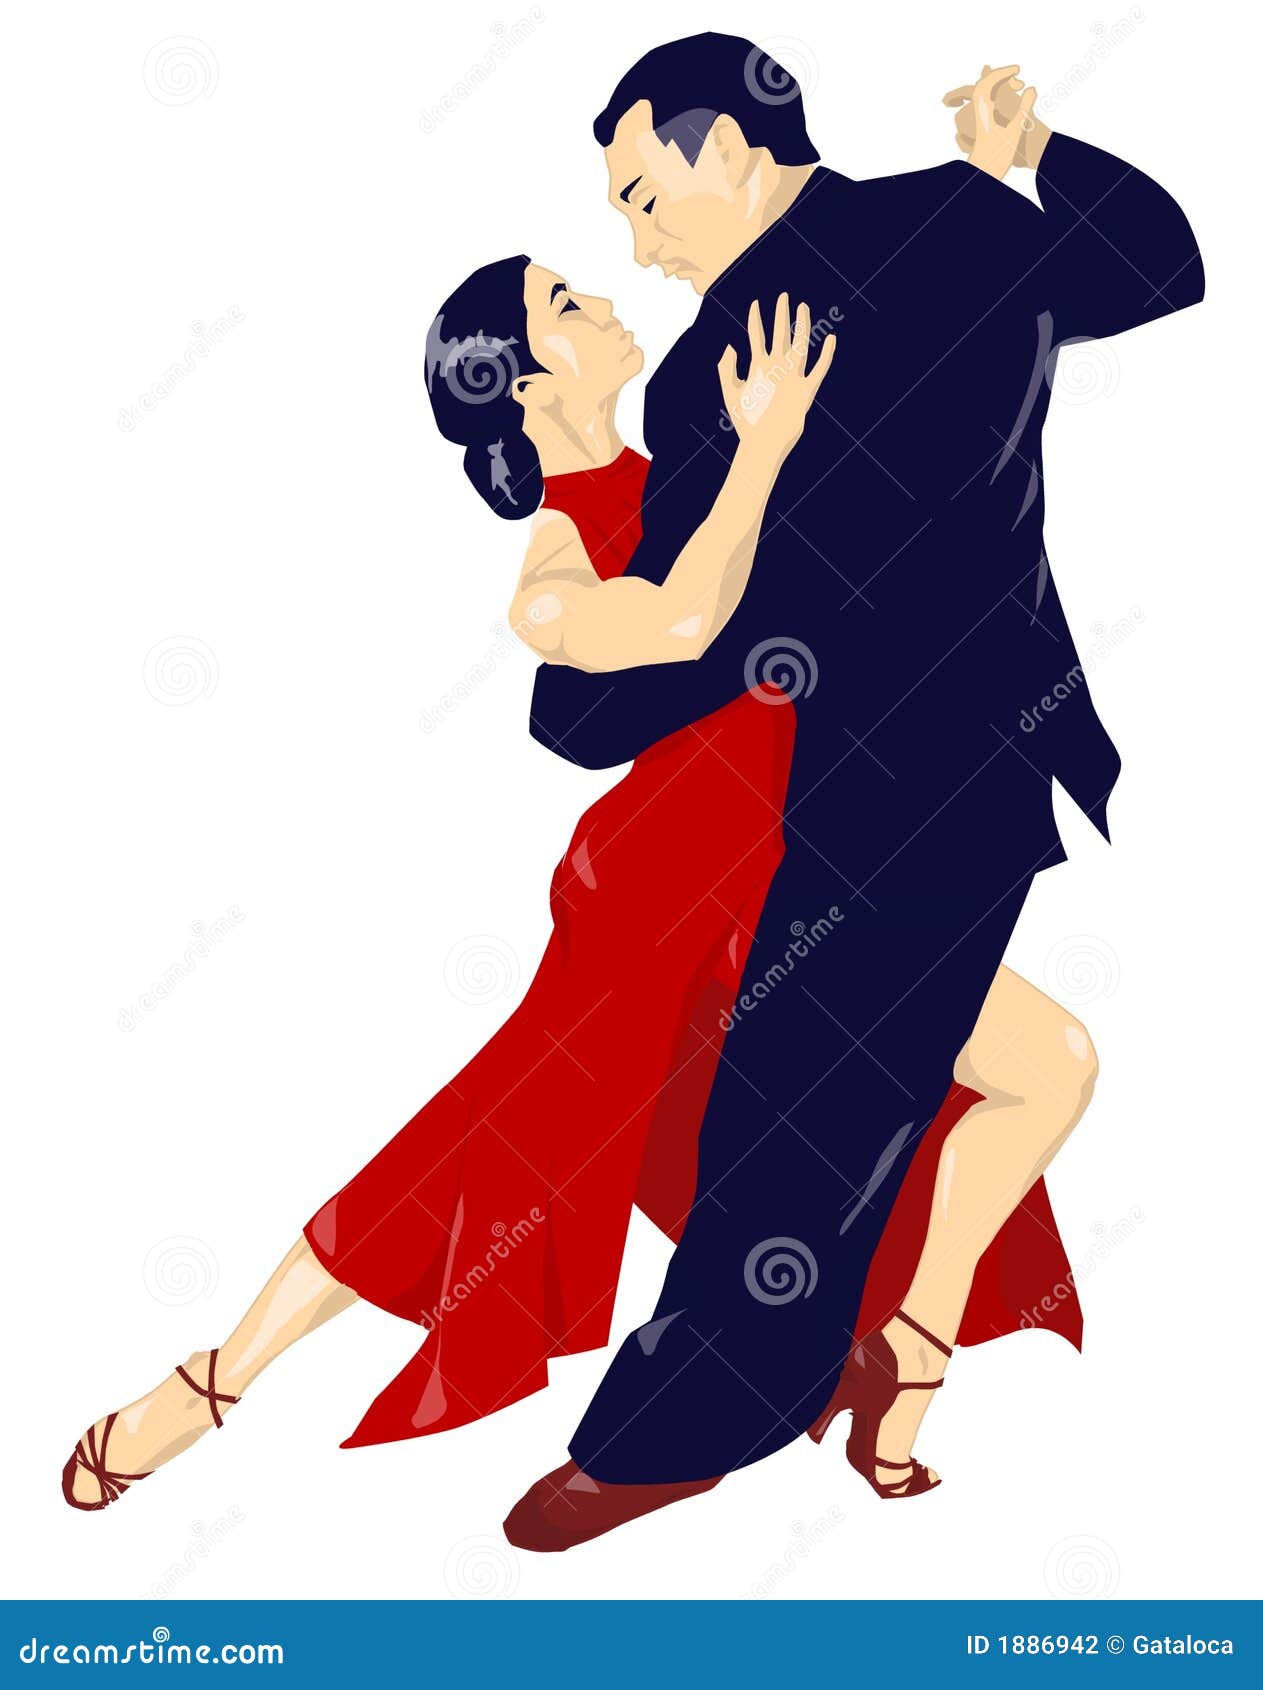 clipart tango argentin - photo #26